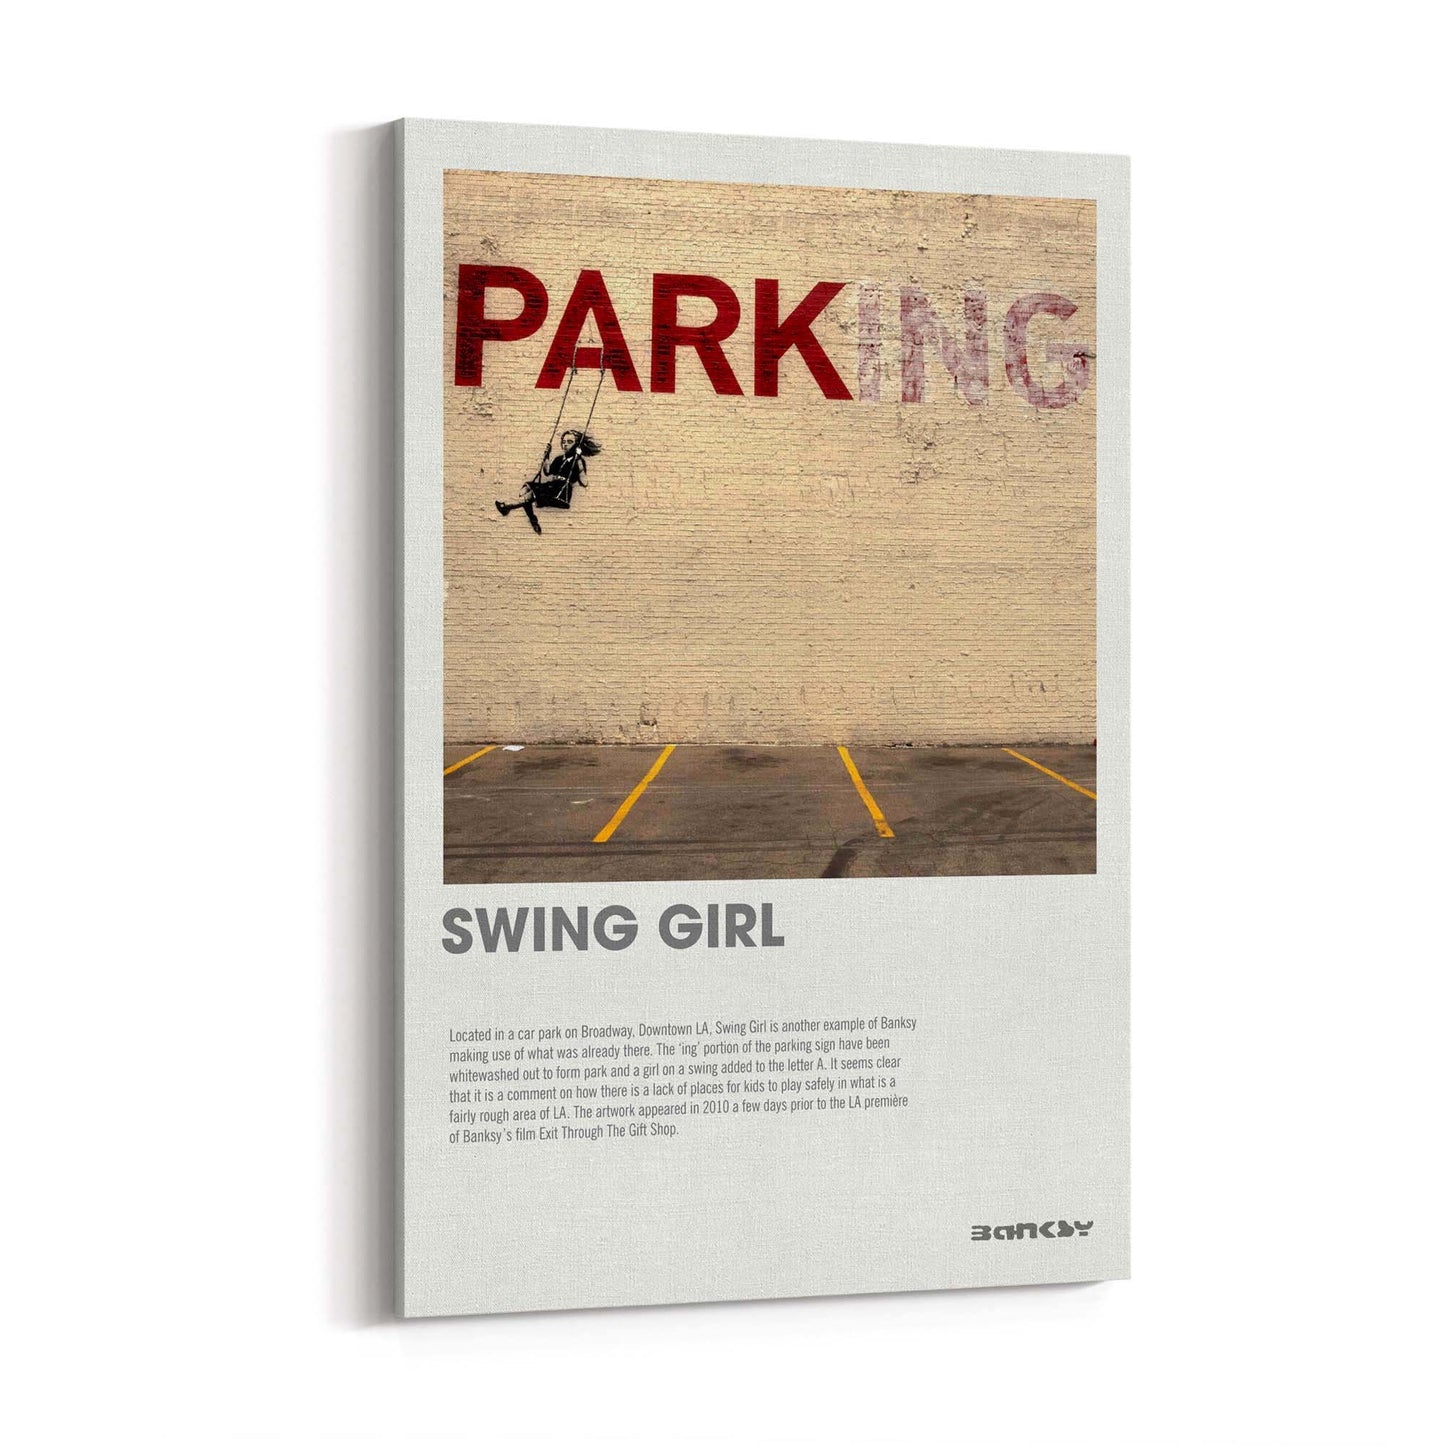 Banksy "Swing Girl" Graffiti Gallery Style Wall Art - The Affordable Art Company